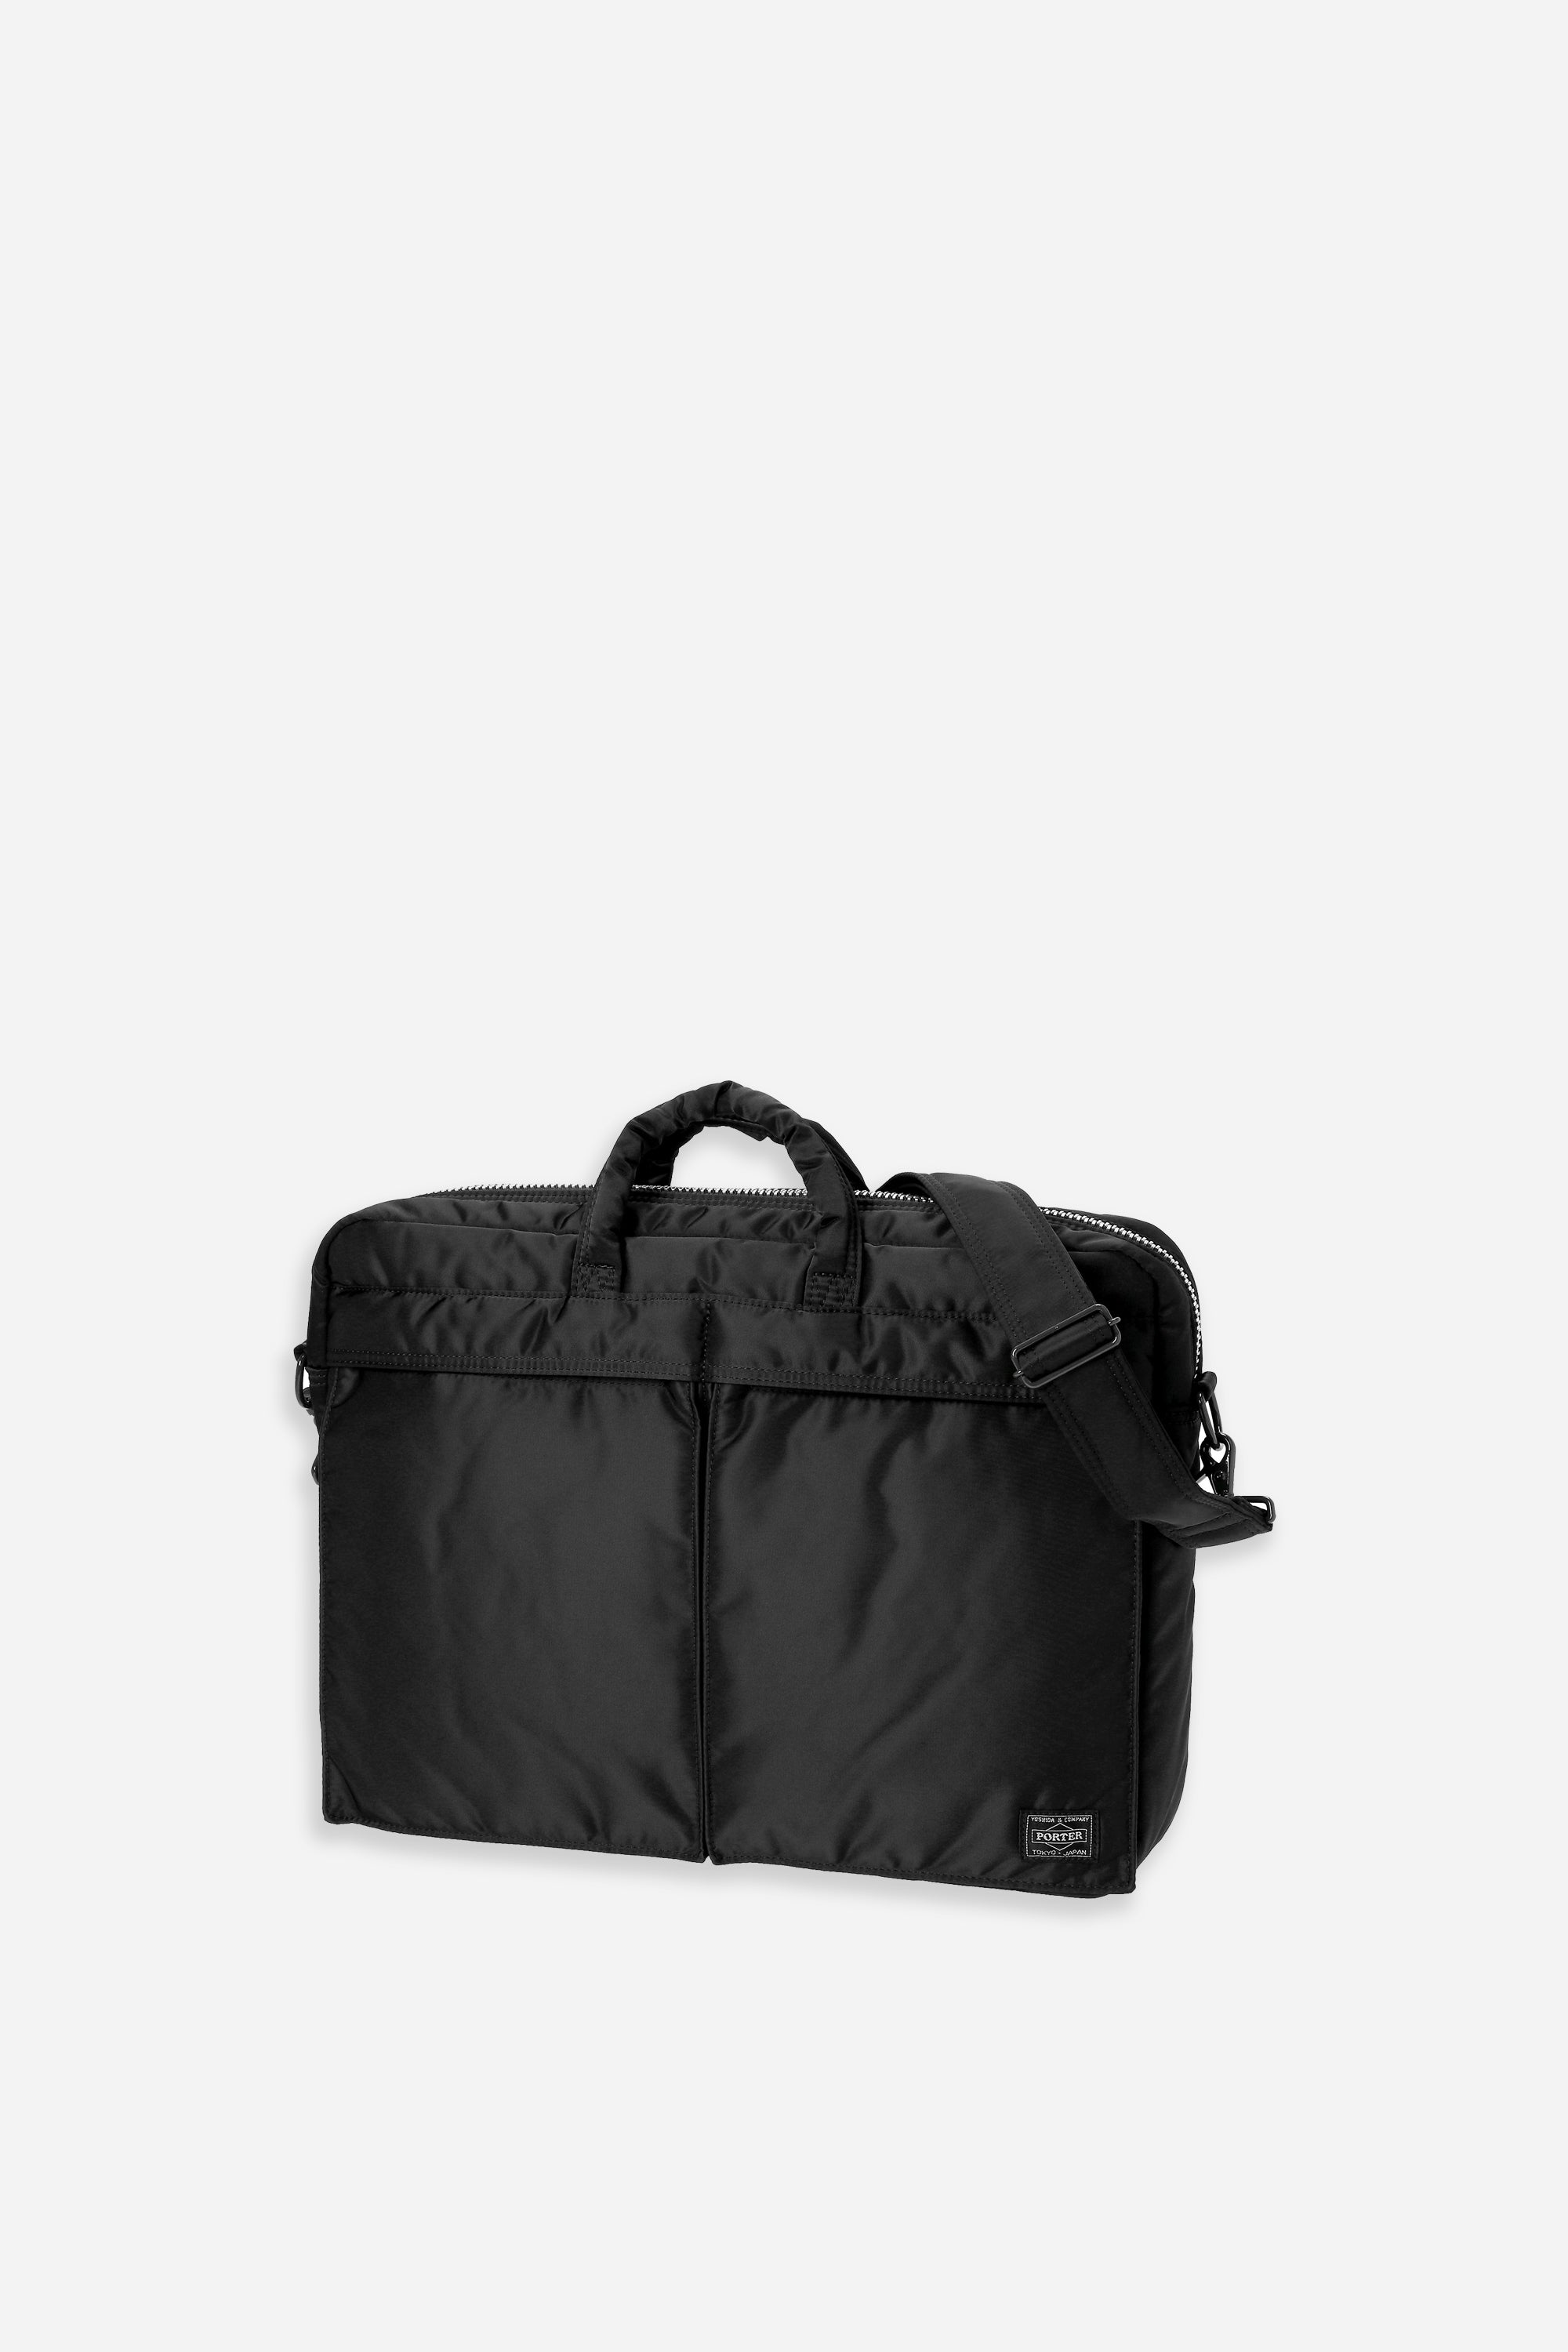 Porter Yoshida & Co Tanker 2Way Briefcase Black | HAVN